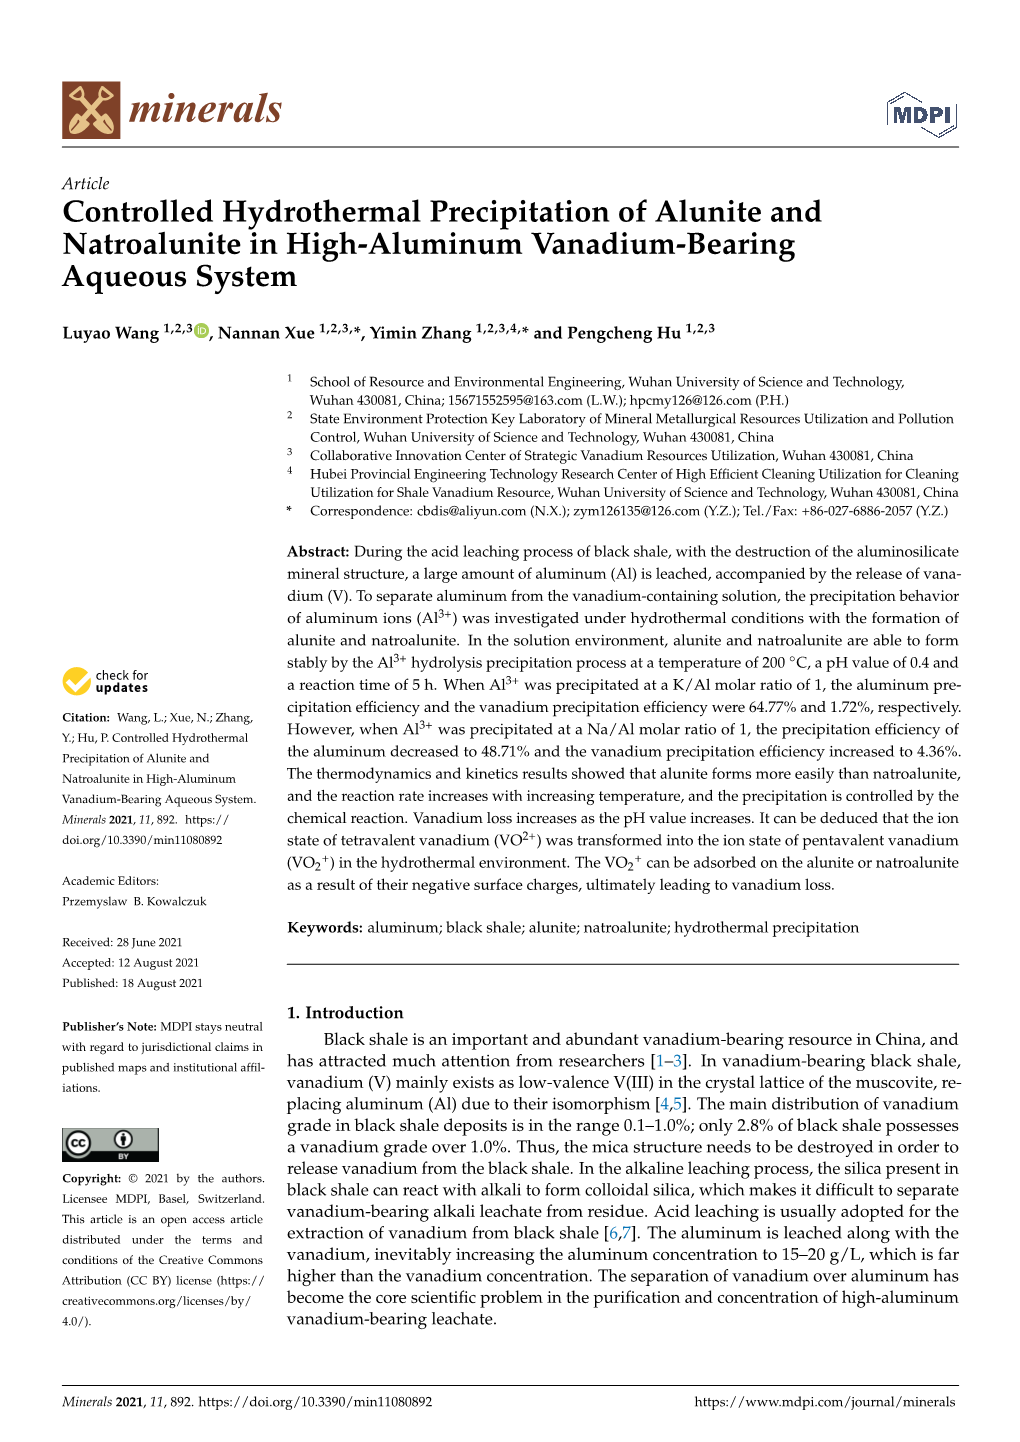 Controlled Hydrothermal Precipitation of Alunite and Natroalunite in High-Aluminum Vanadium-Bearing Aqueous System